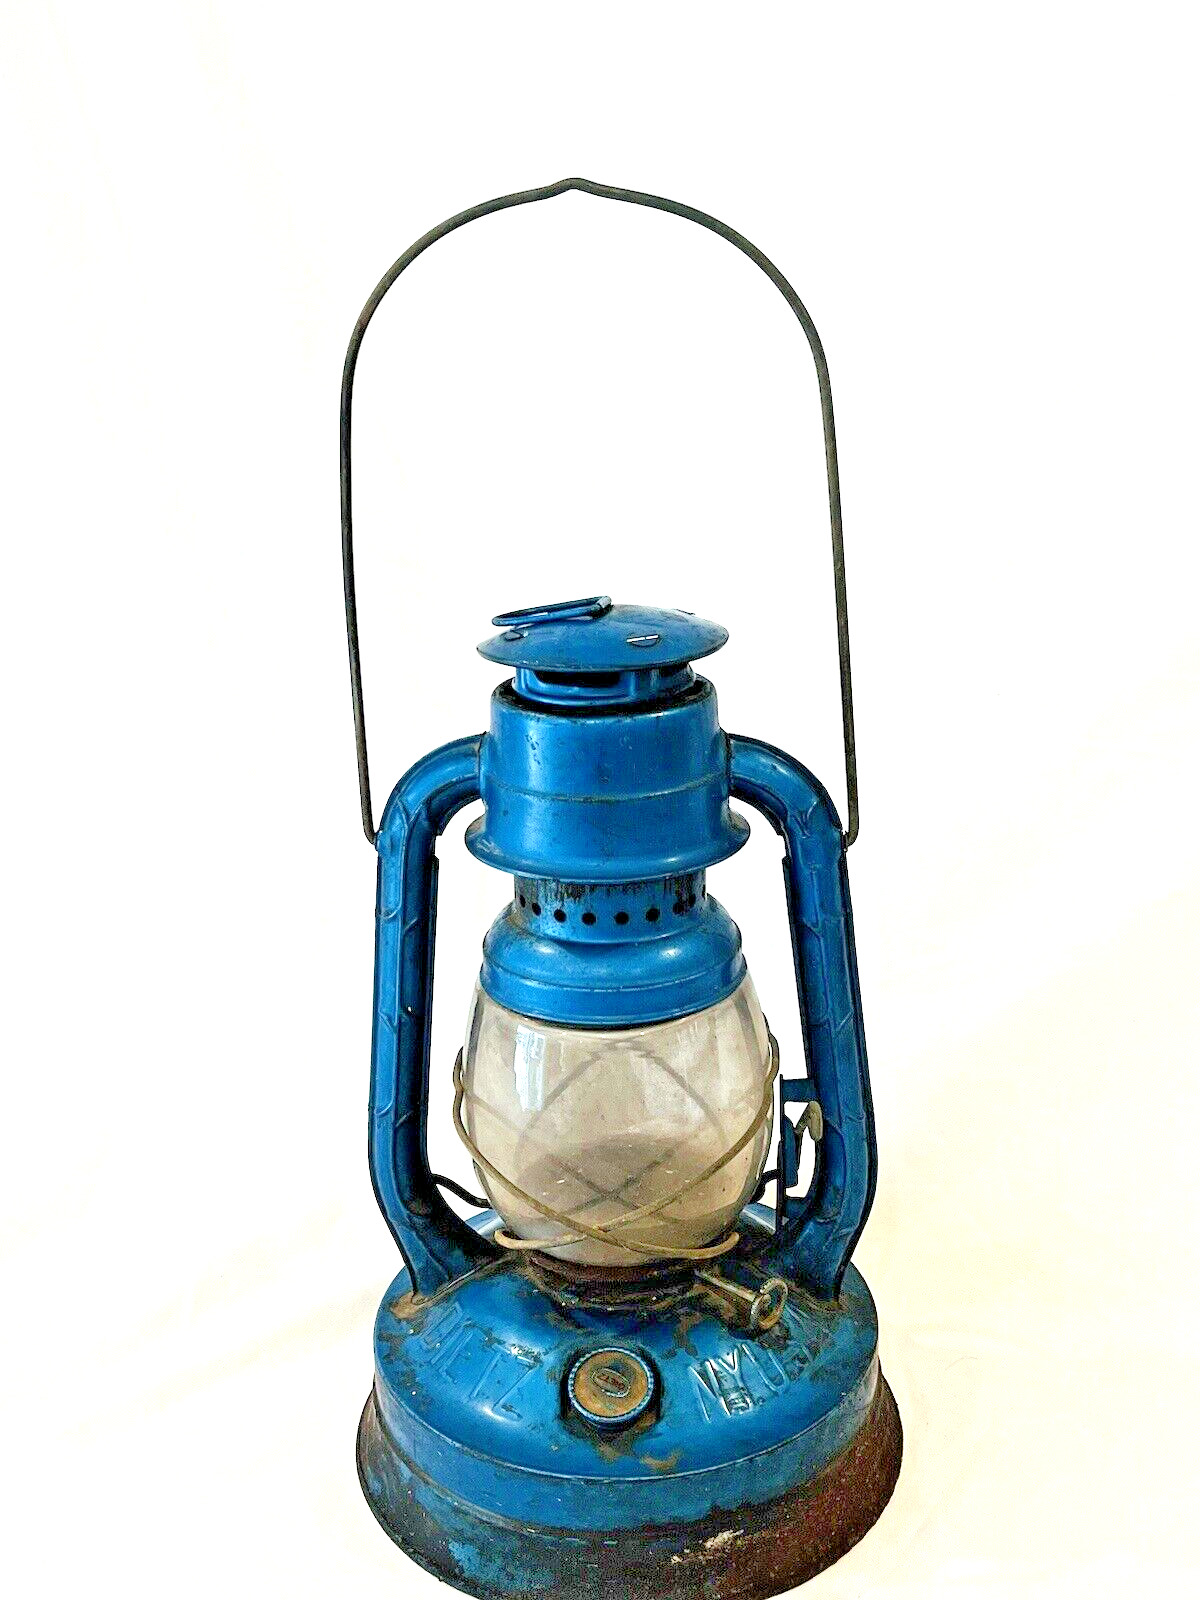 Vtg Dietz No. 100 Blue Kerosene Oil Lantern with Glass Globe Made In N Y U.S.A.